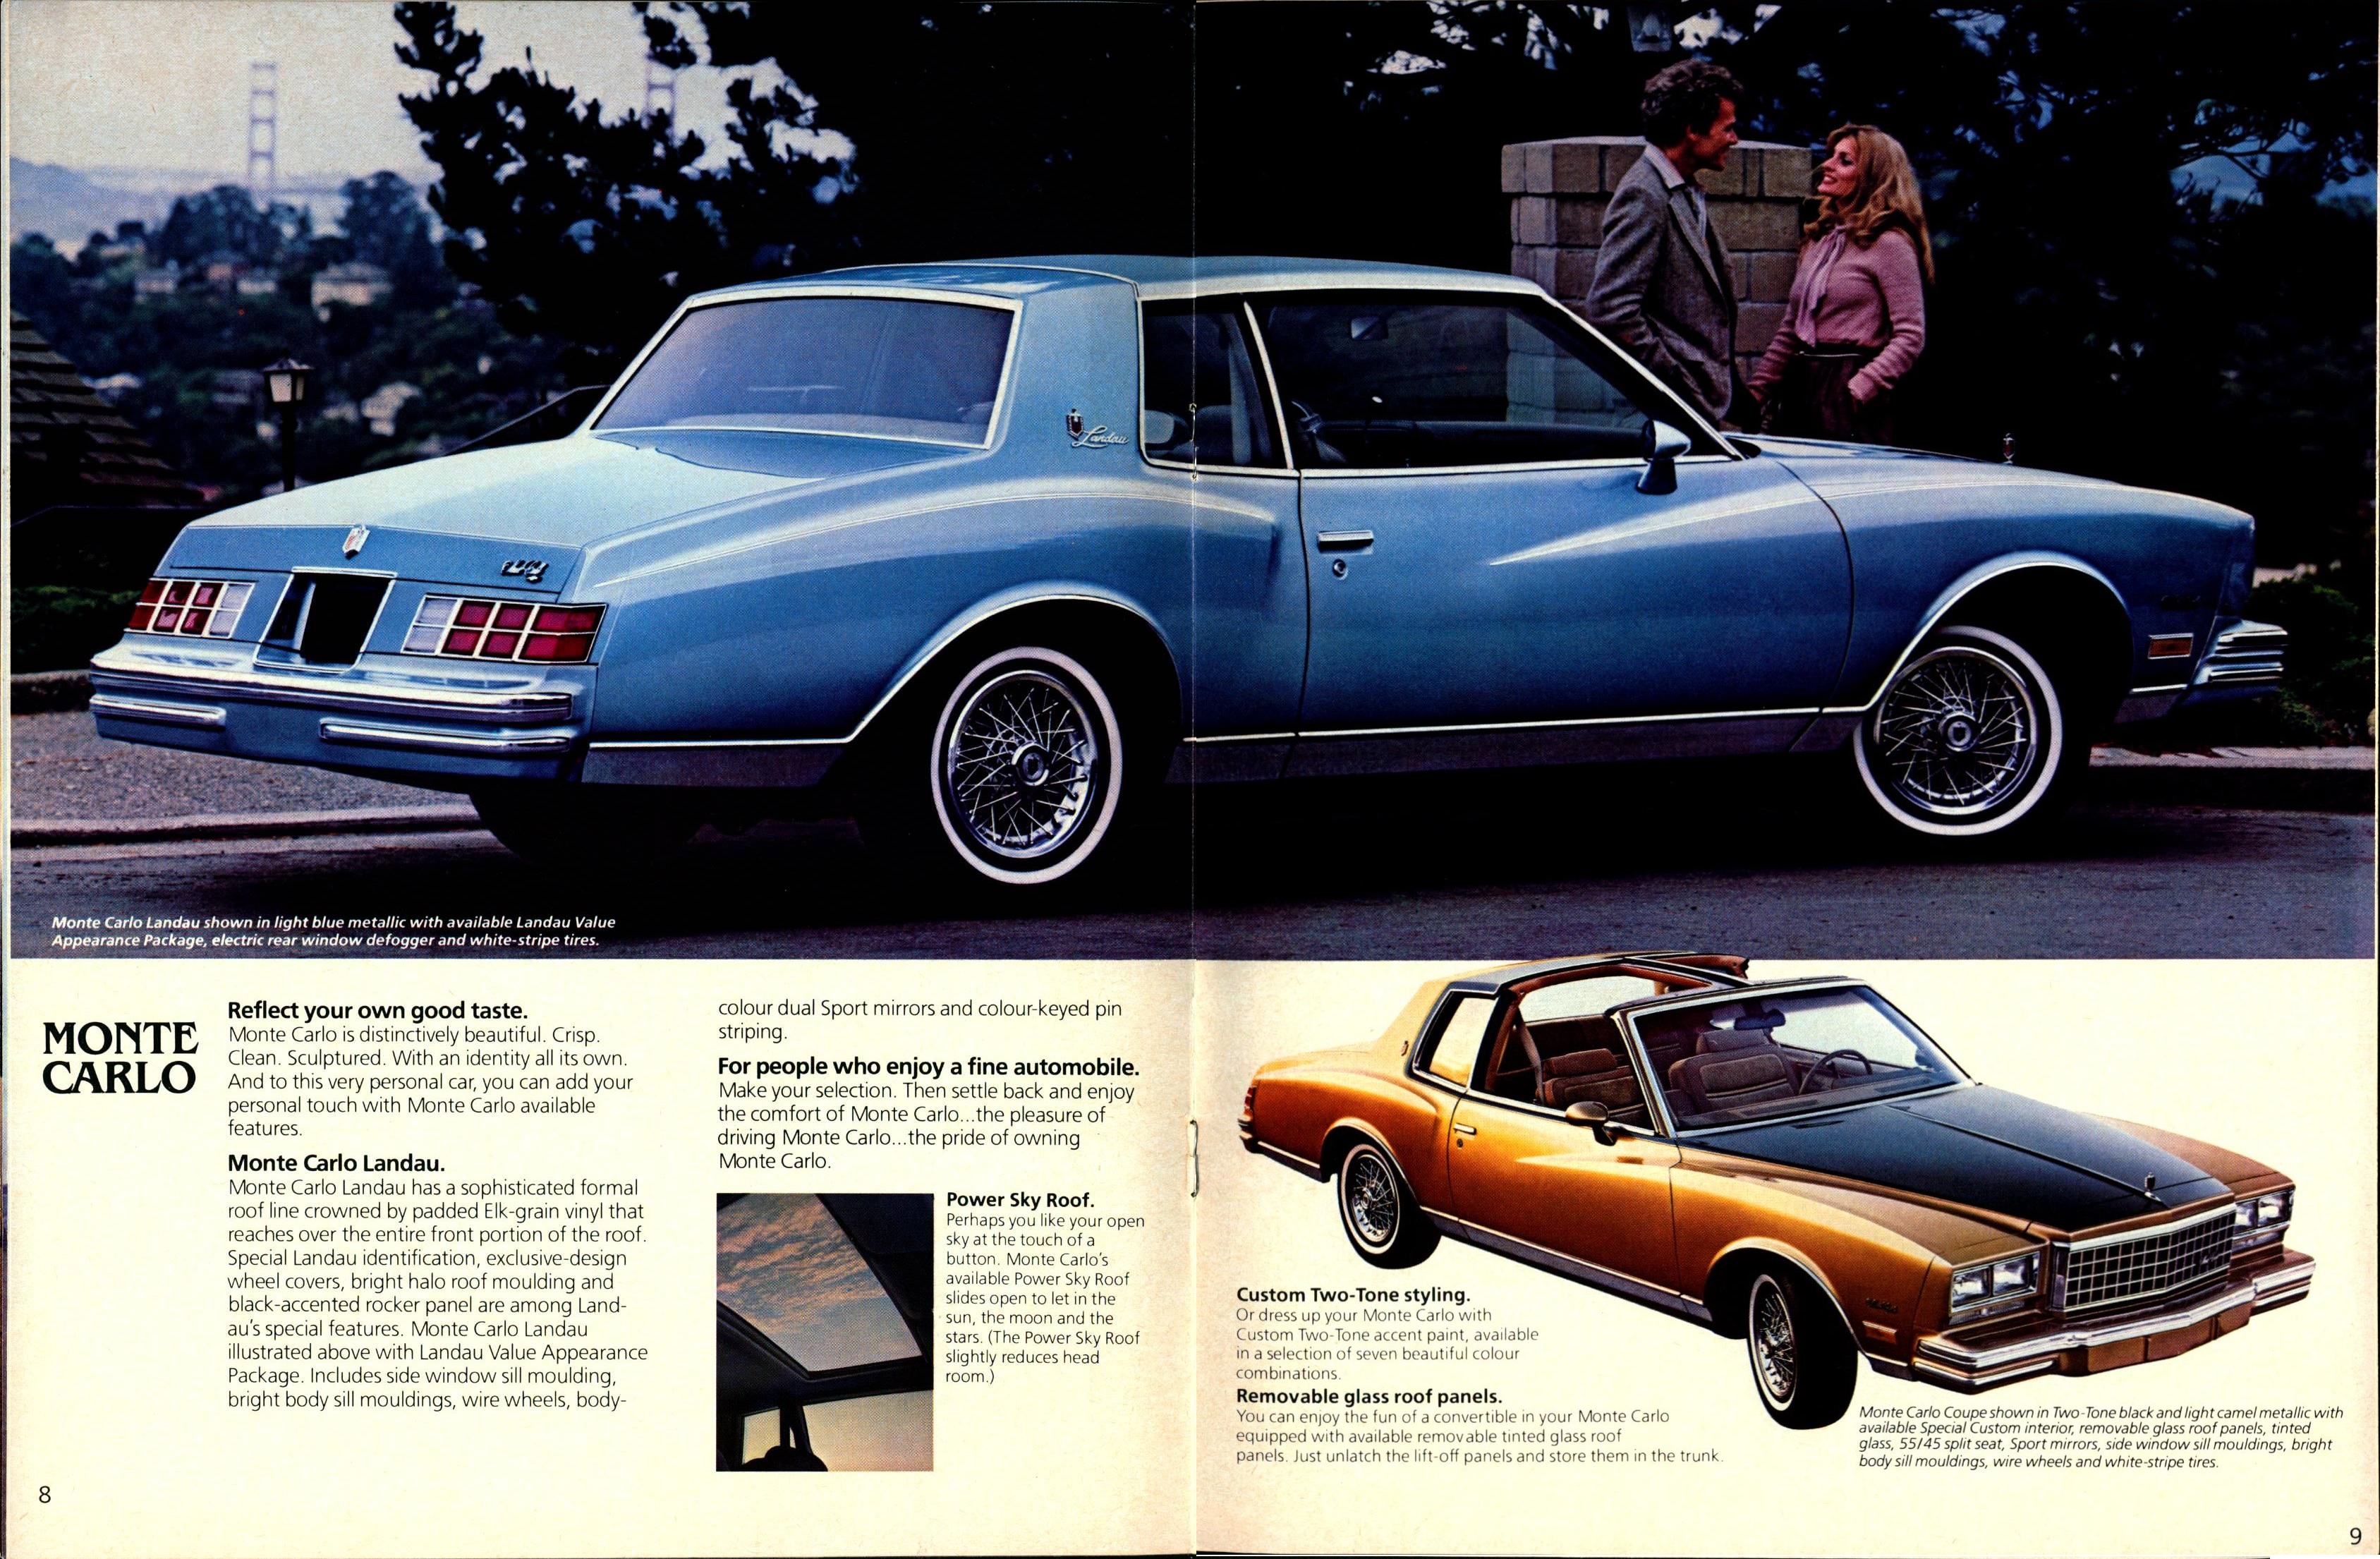 1980 Chevrolet Monte Carlo Canada  08-09